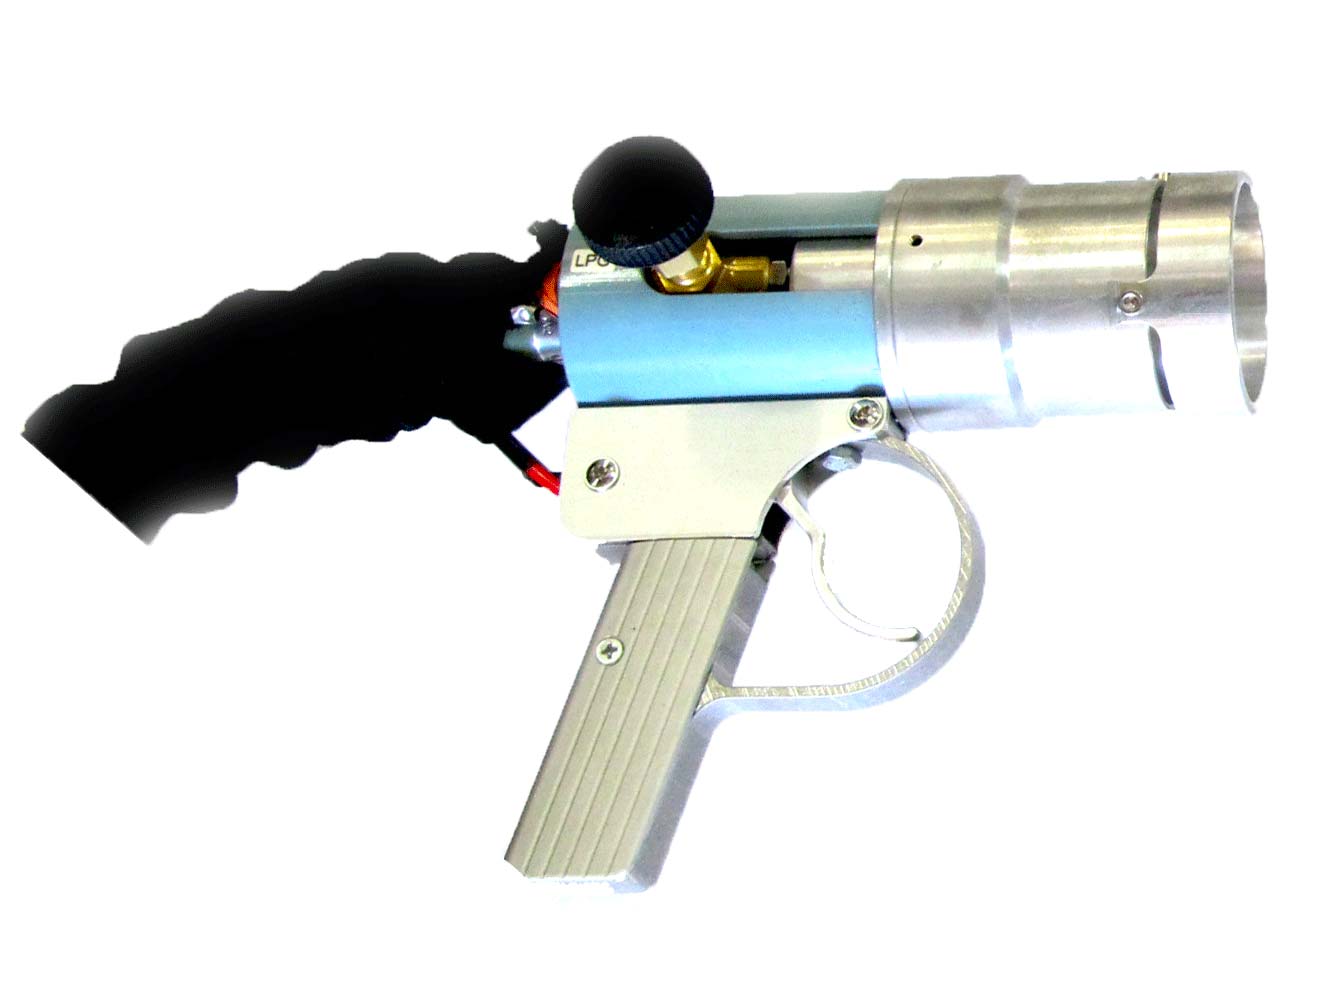 Medium gun: suitable for smaller diameter pipe joints.